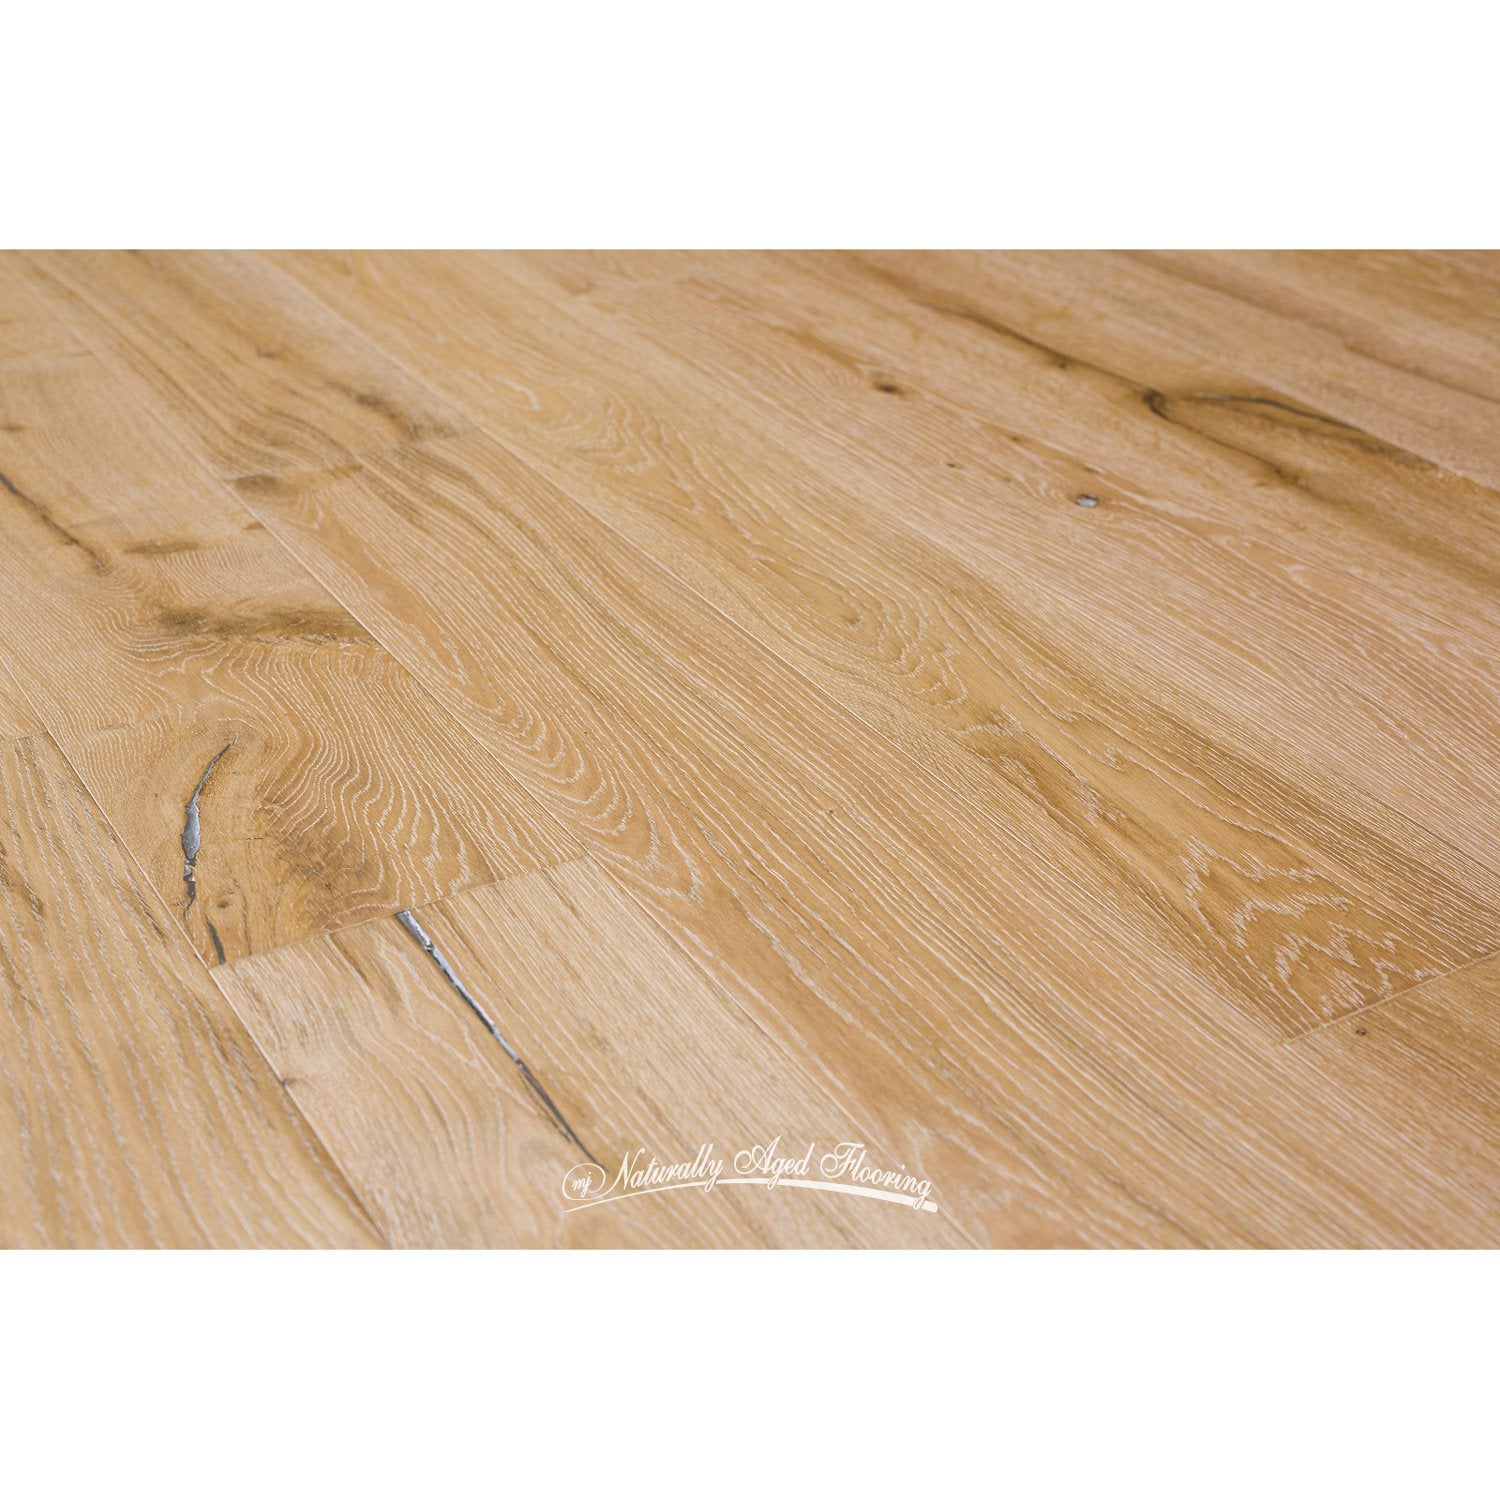 Naturally Aged Flooring - Wire Brushed Series, Oak Engineered Hardwood - Snow Cap